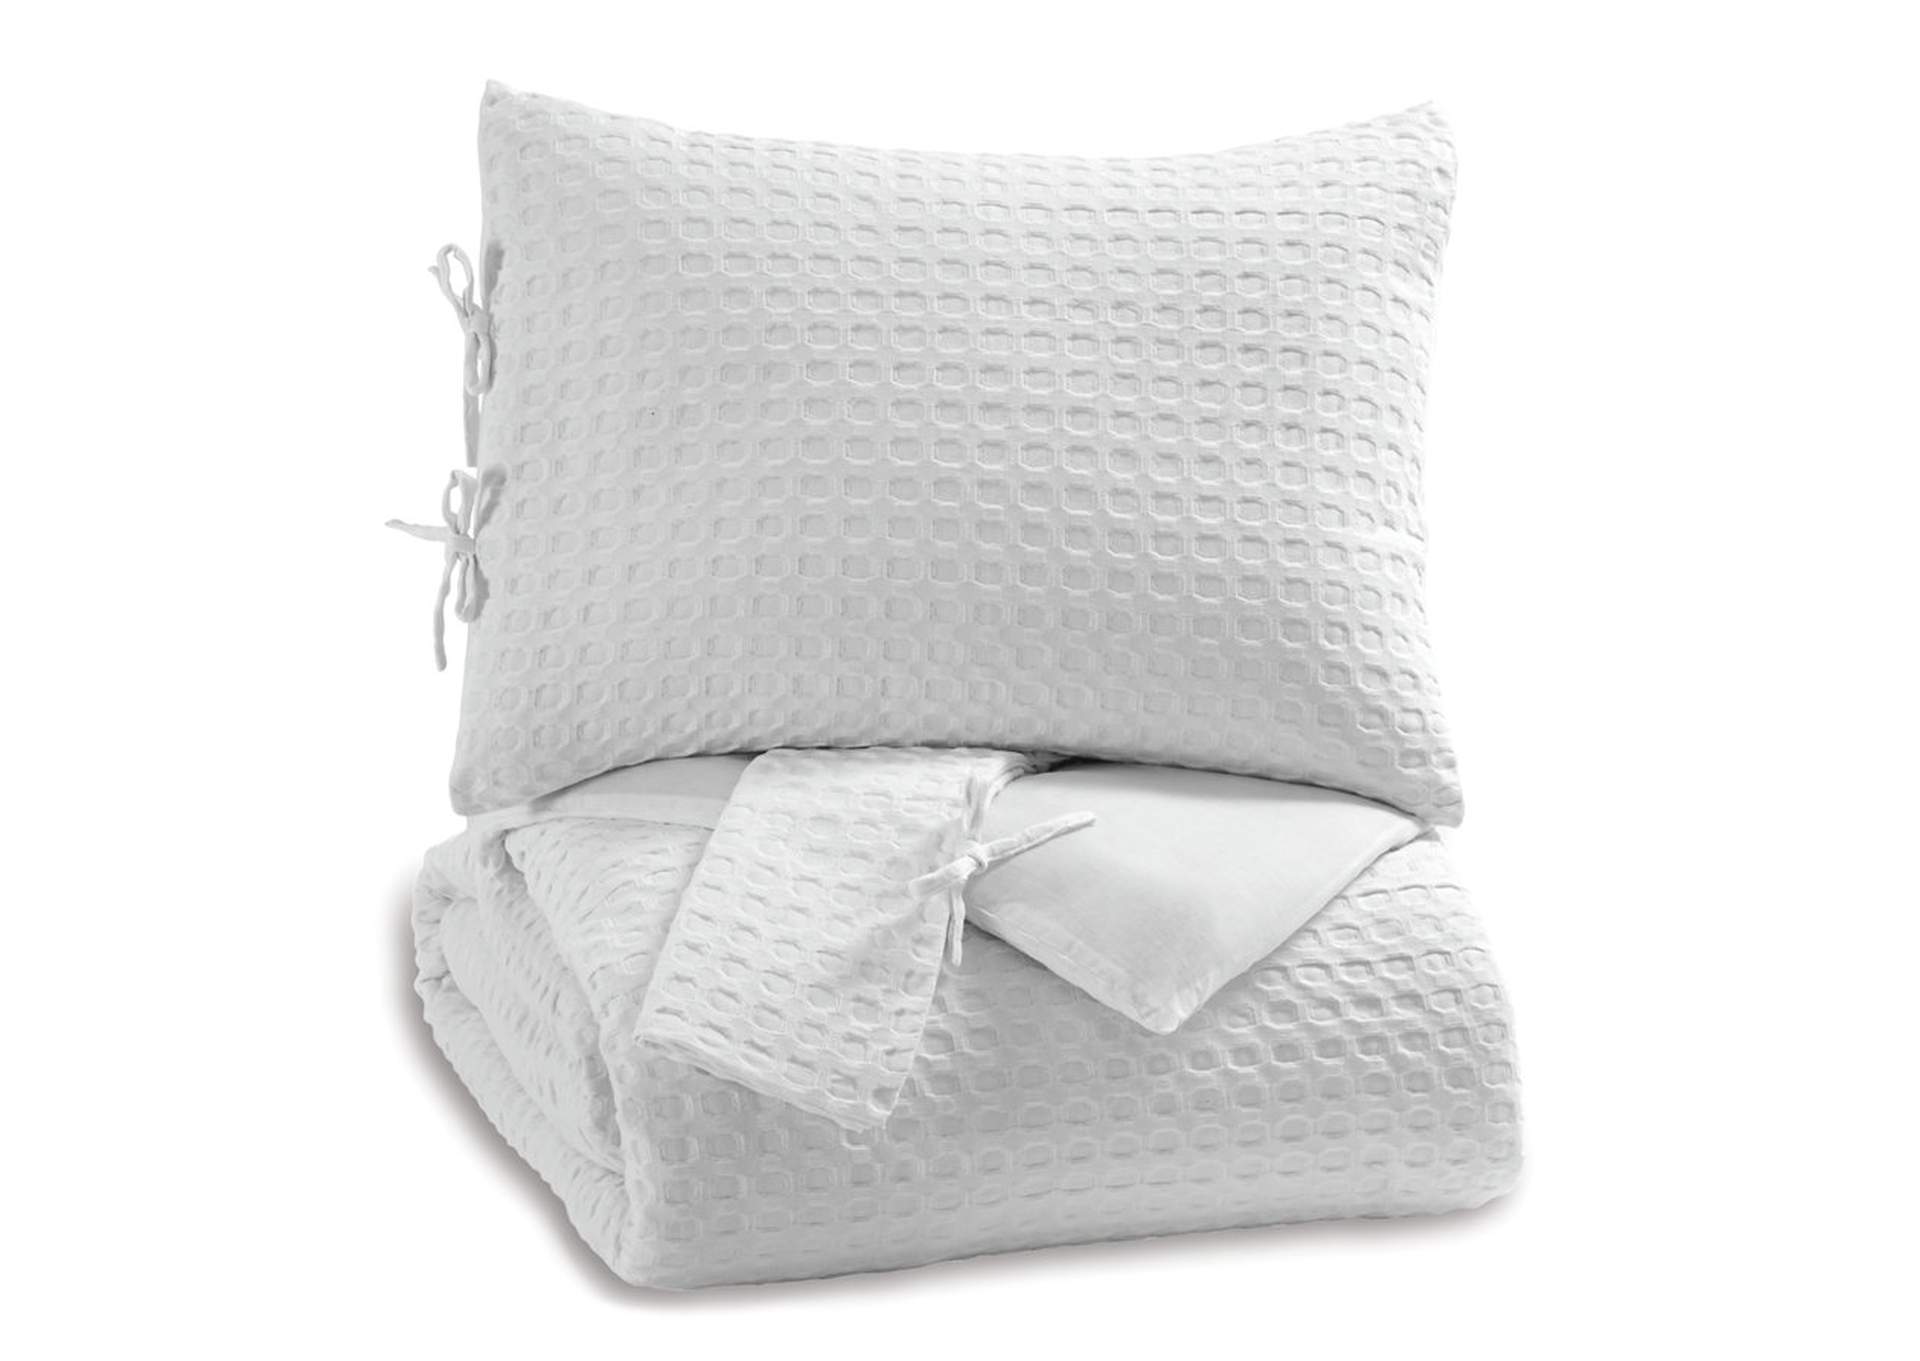 Maurilio 3-Piece King Comforter Set,Direct To Consumer Express